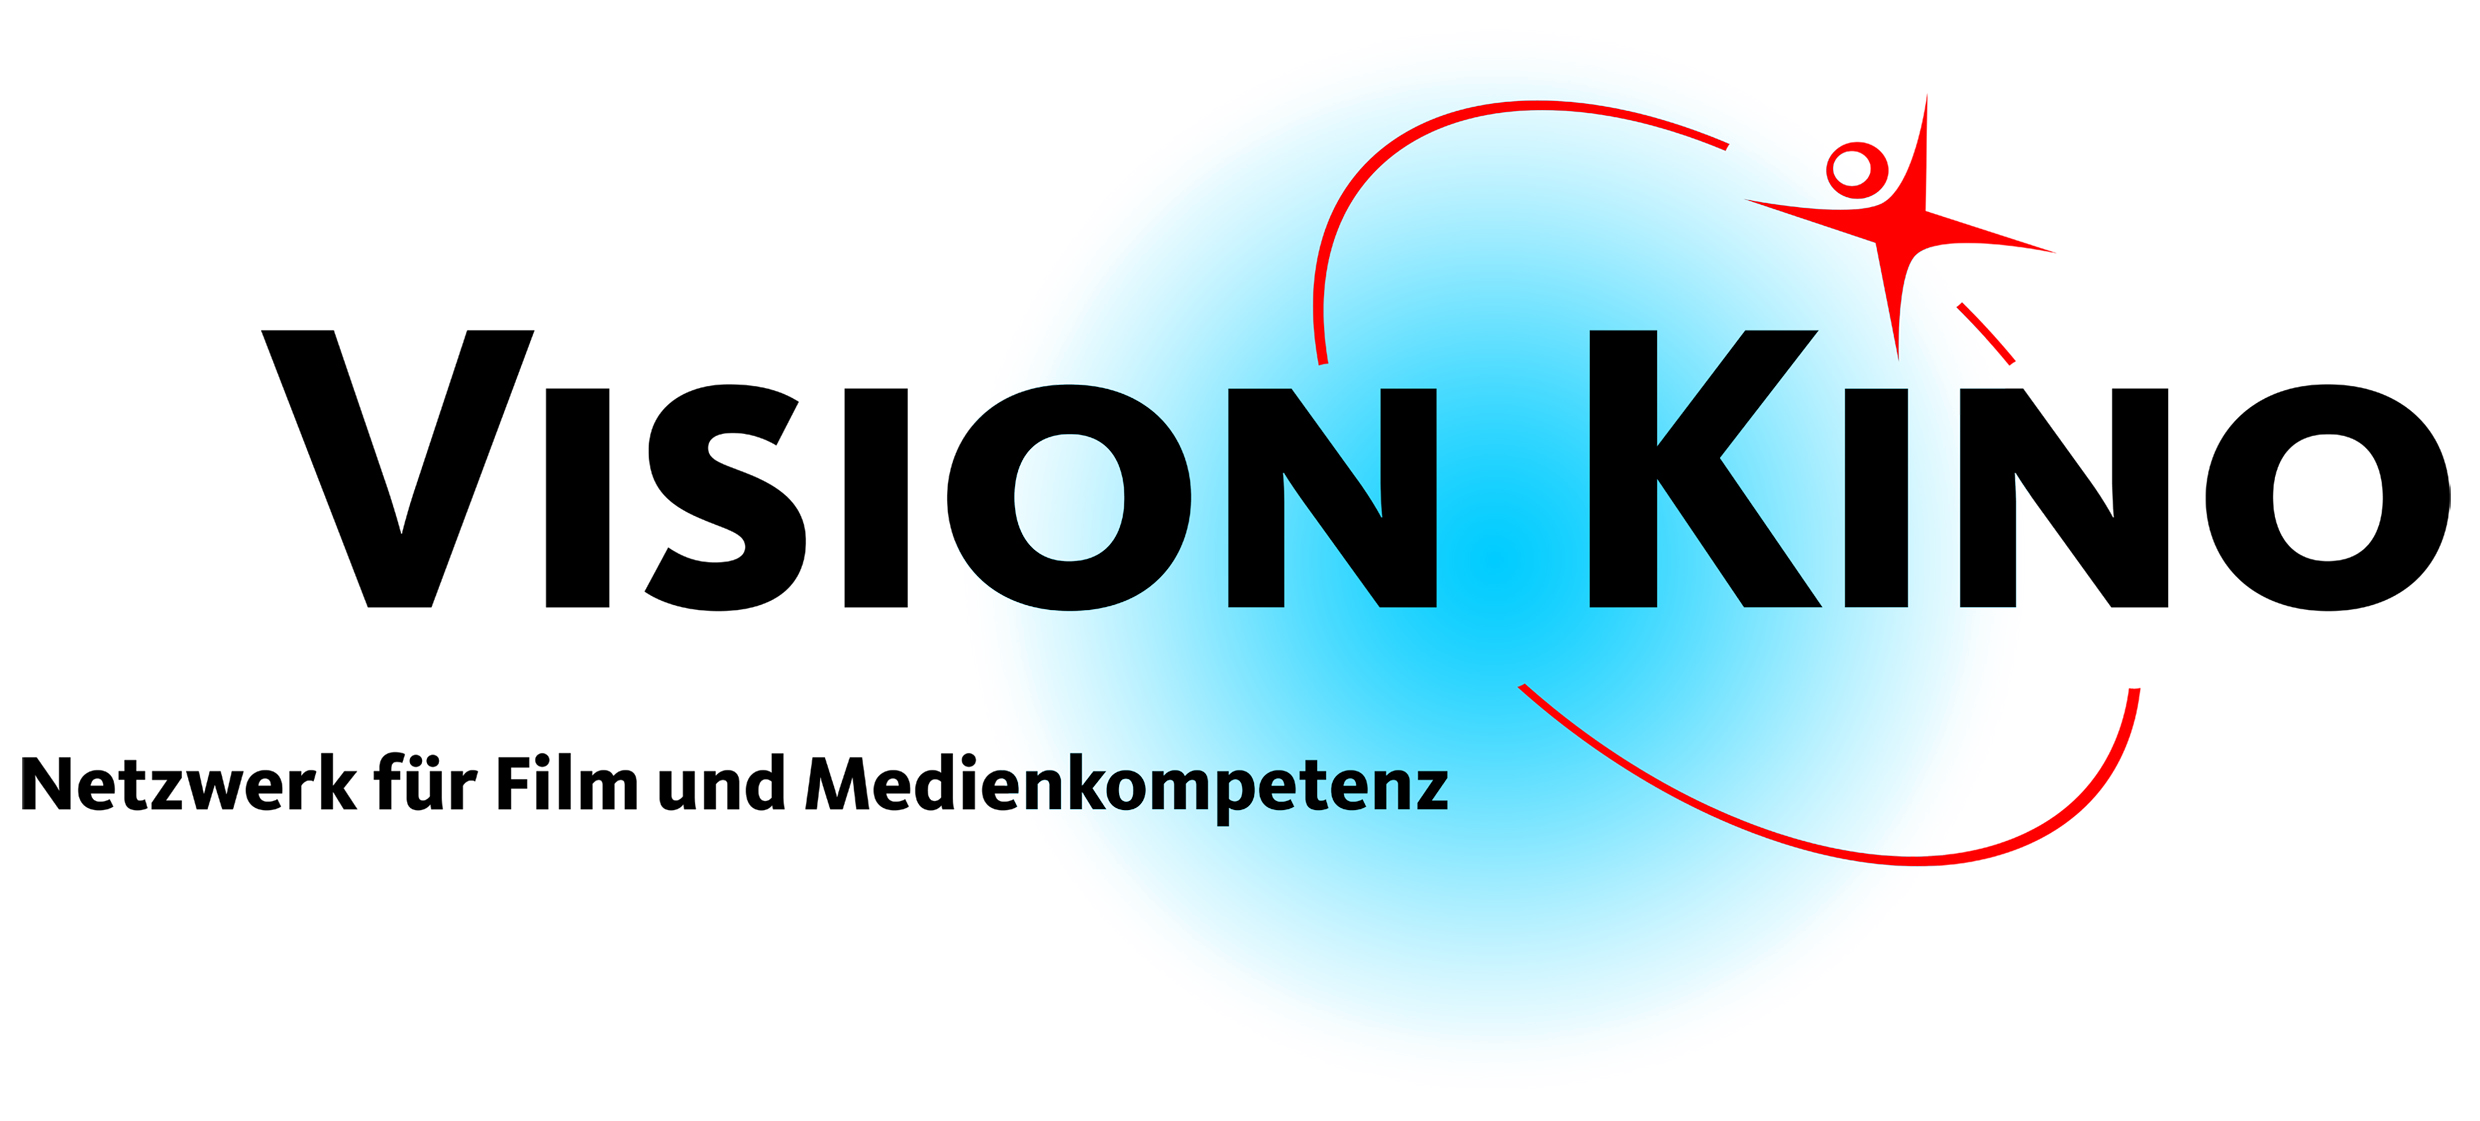 VISION-KINO-Logo-transparent